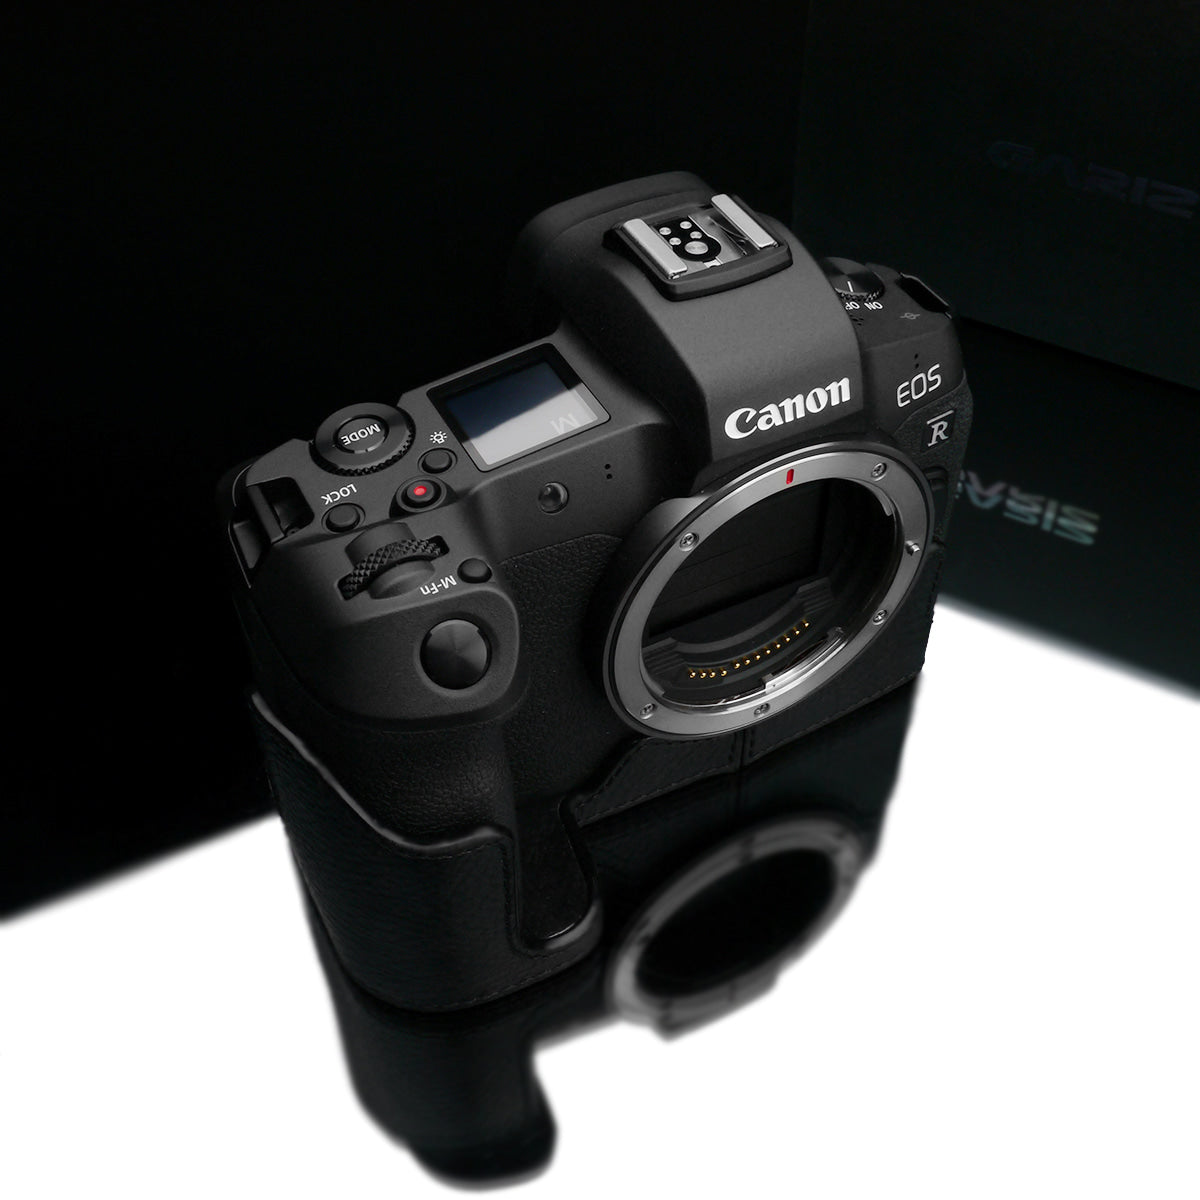 Gariz XS-CHEOSRBK Black Leather Camera Half Case for Canon EOS R